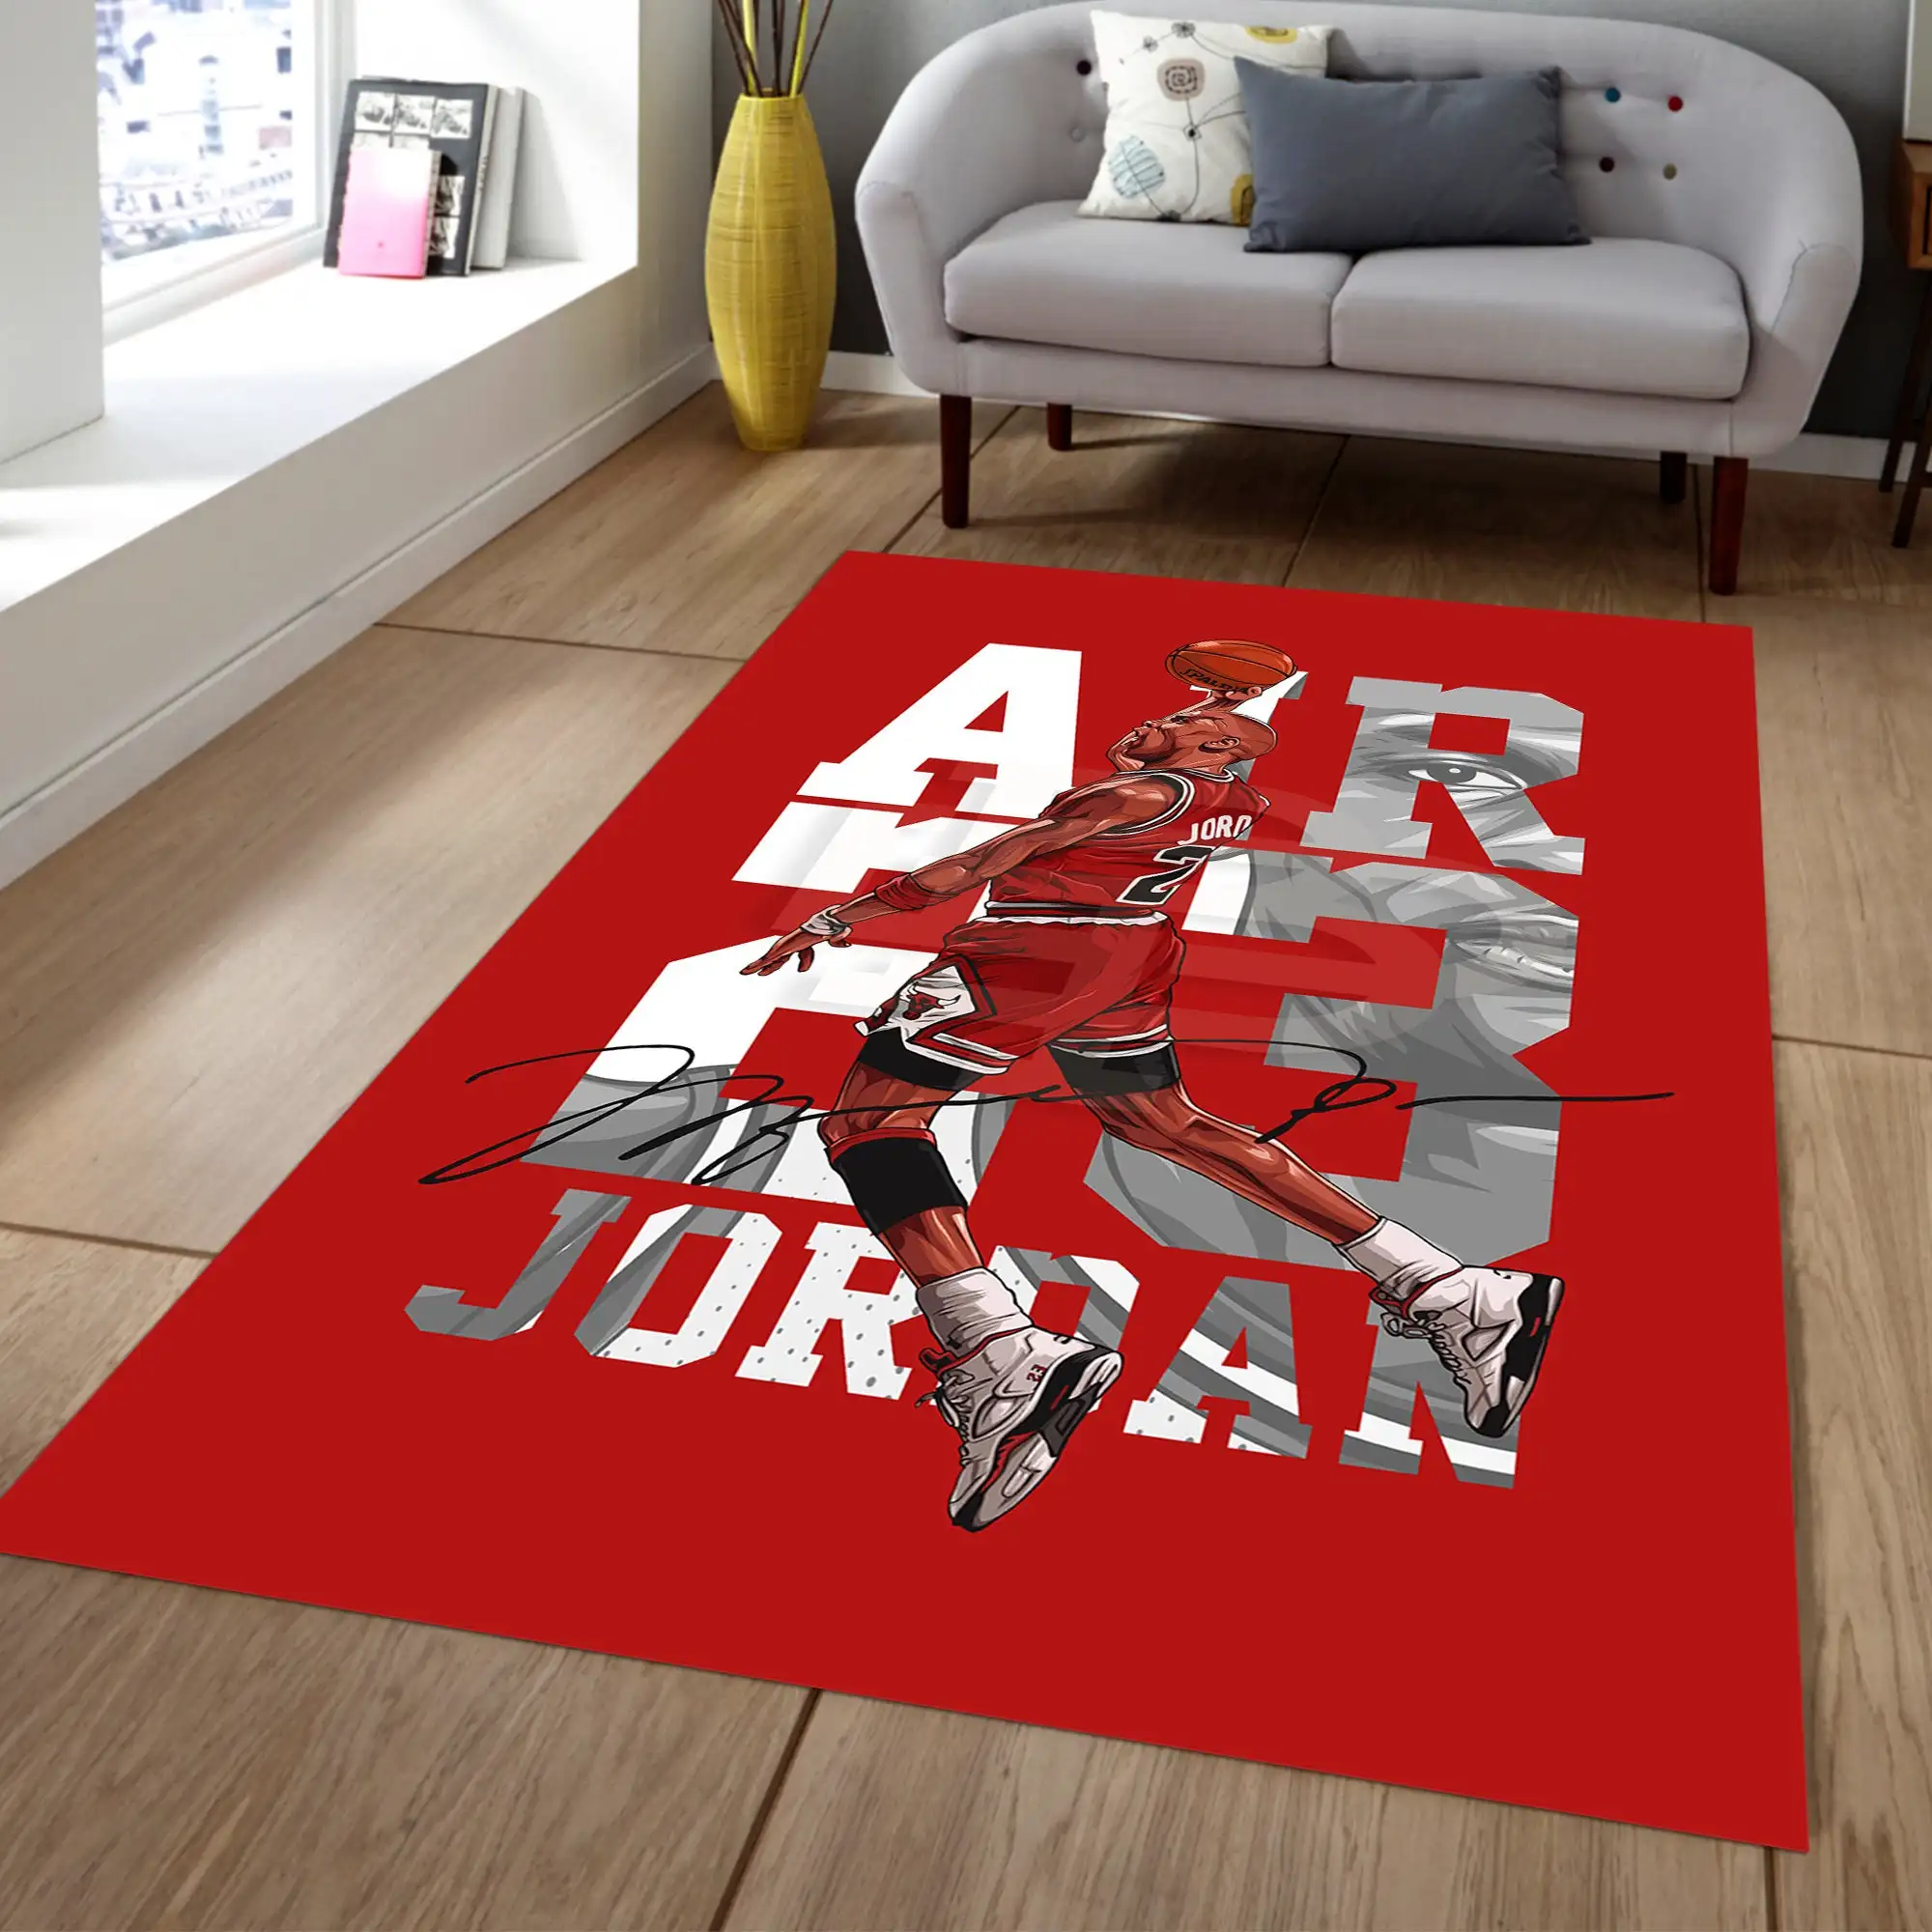 Tapete Jordans Tapete De Basquete Minimalista Popular Living Room Decor Anti Slip Area Tapete Kids Room Play Mats